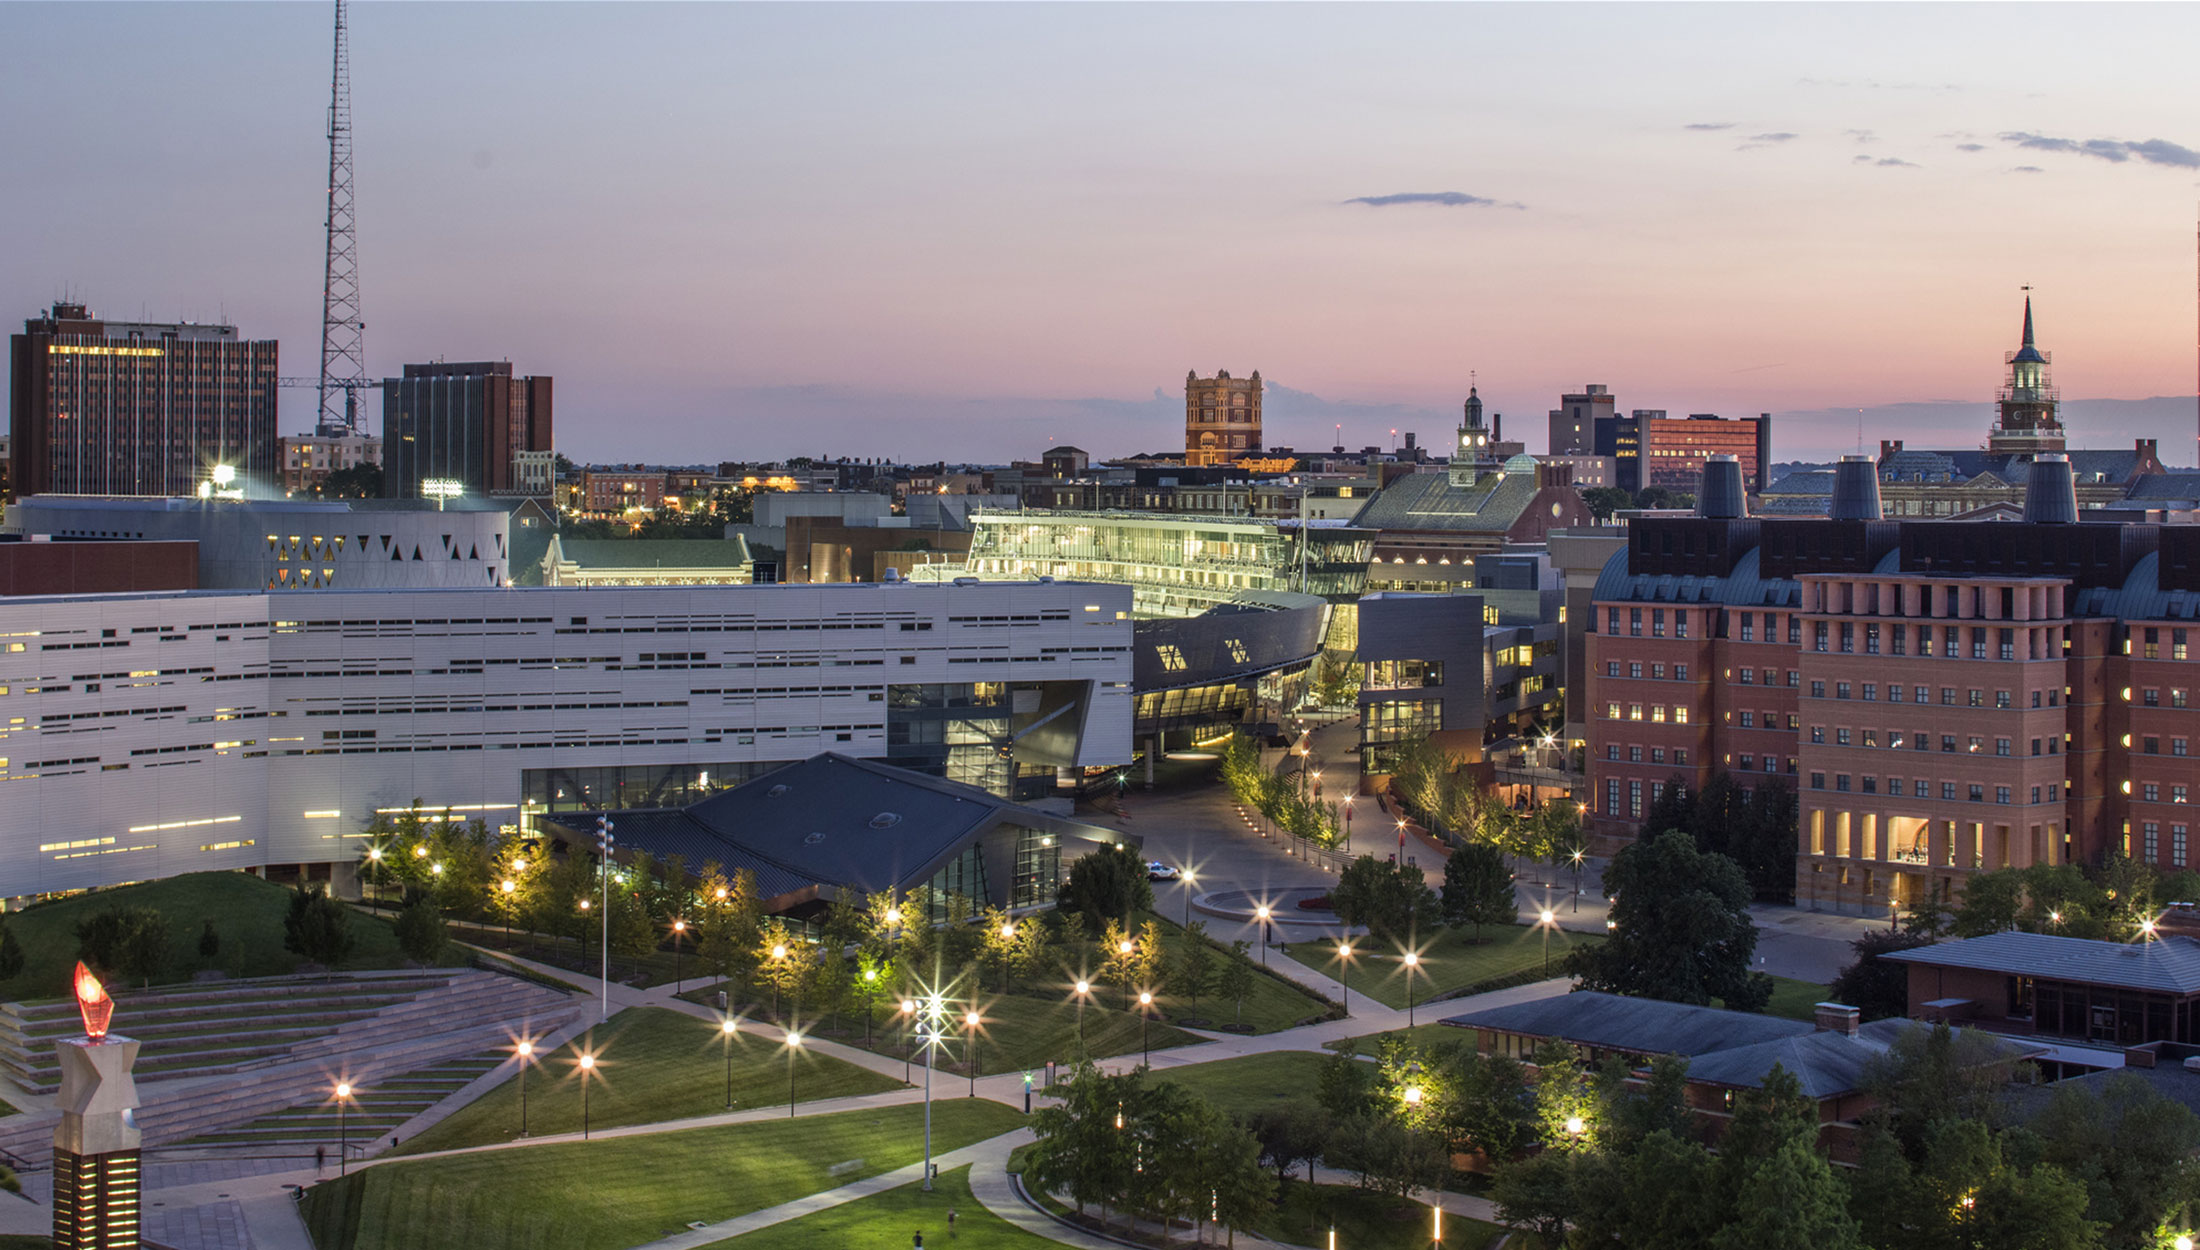 Aerial view of the University of Cincinnati campus at dusk